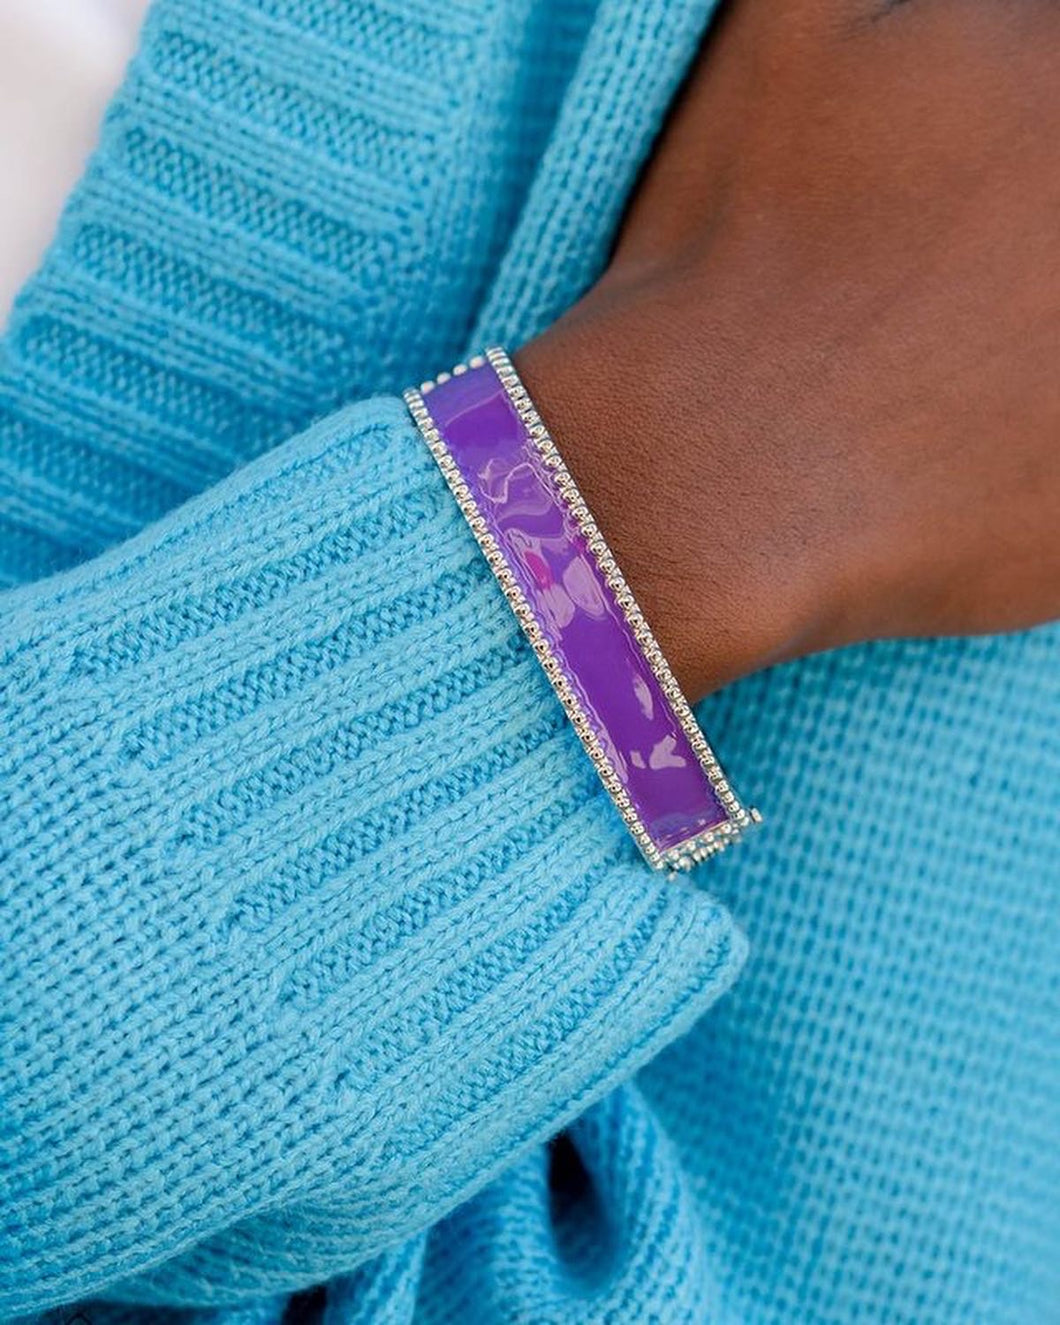 Vintage Vivace - Purple Bracelet